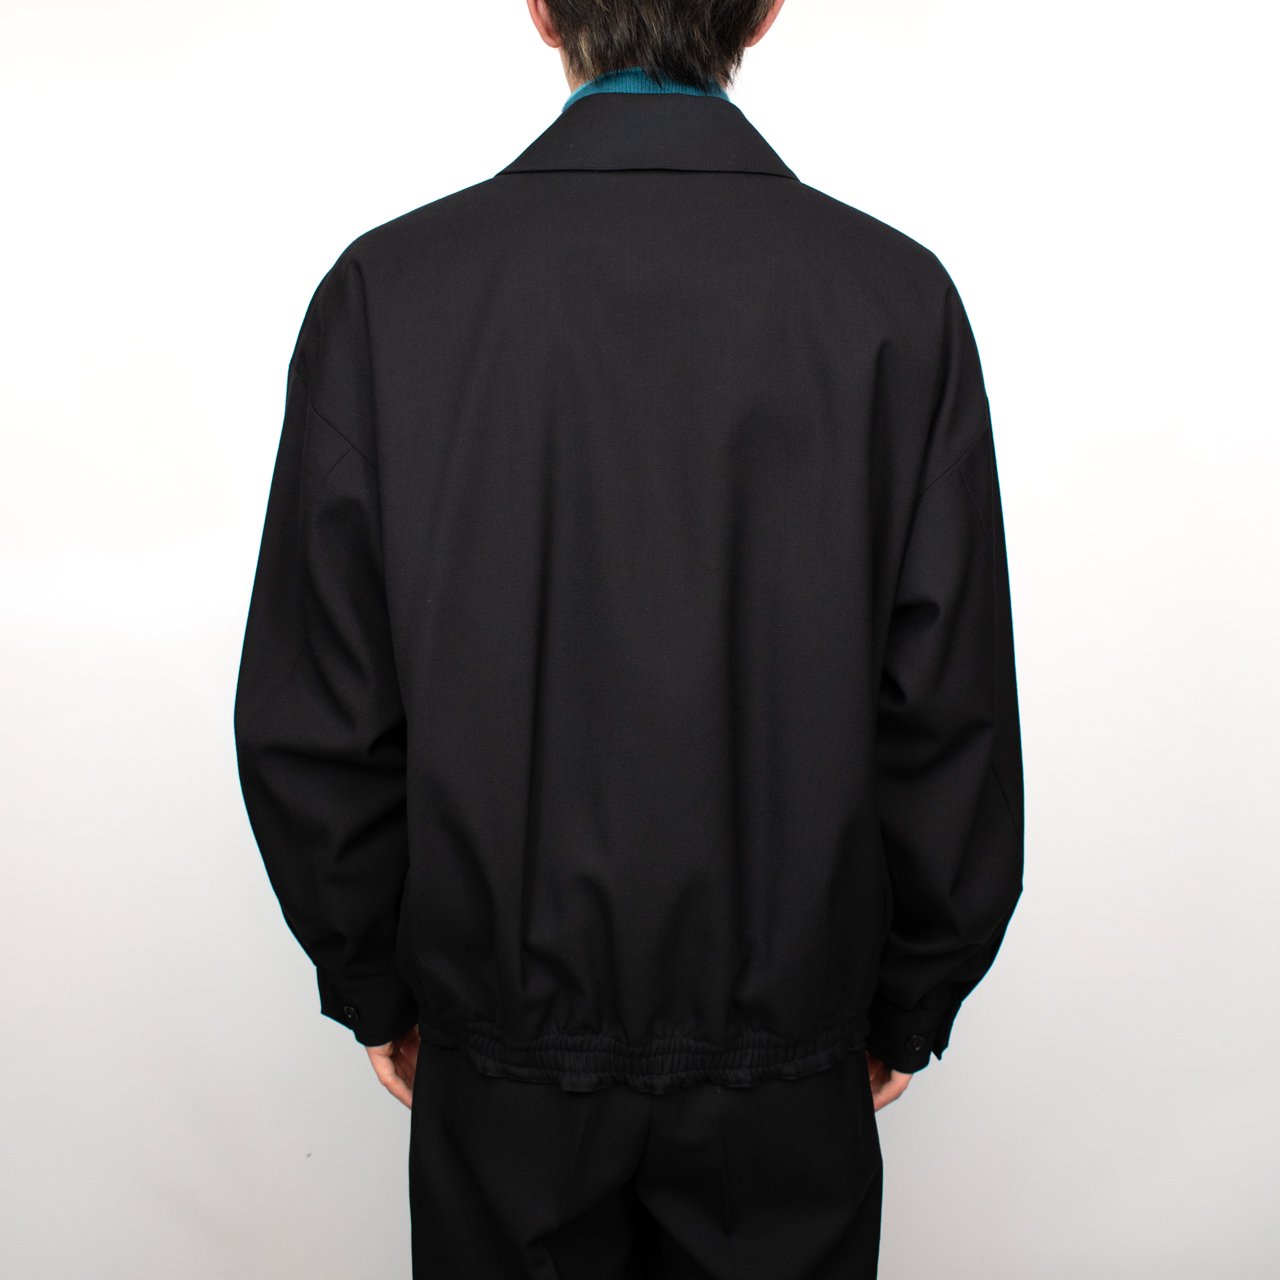 MARKAWARE (マーカウェア)23FW/秋冬 WIDE SPORTS JACKET BLACK -ORGANIC WOOL SURVIVAL CLOTH-